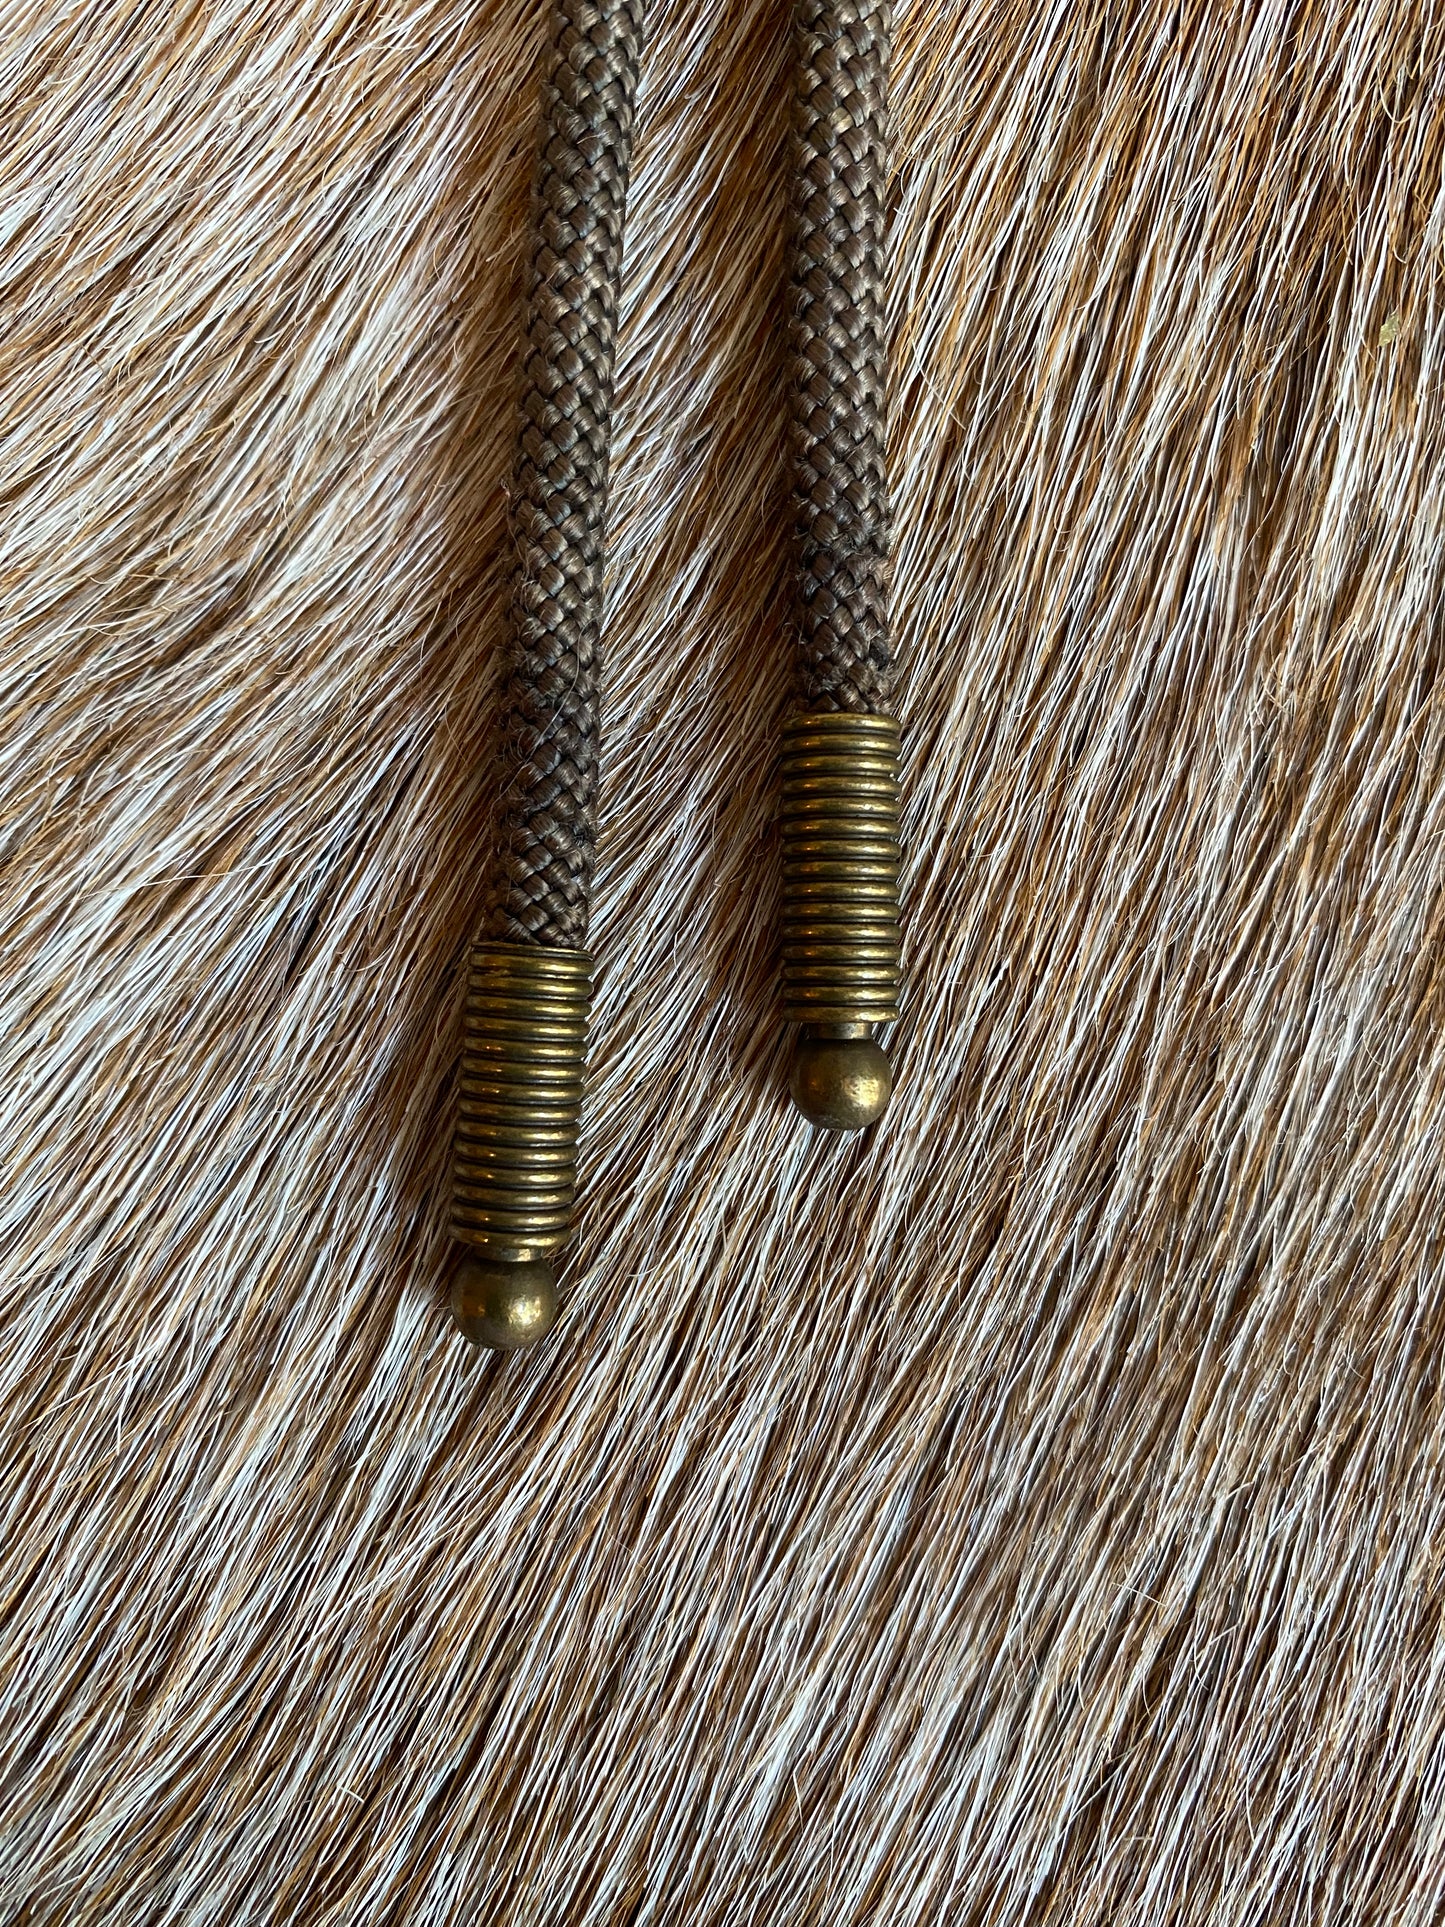 Gold Horse & Horseshoe Pendant w/ Grey Cord Bolo Tie